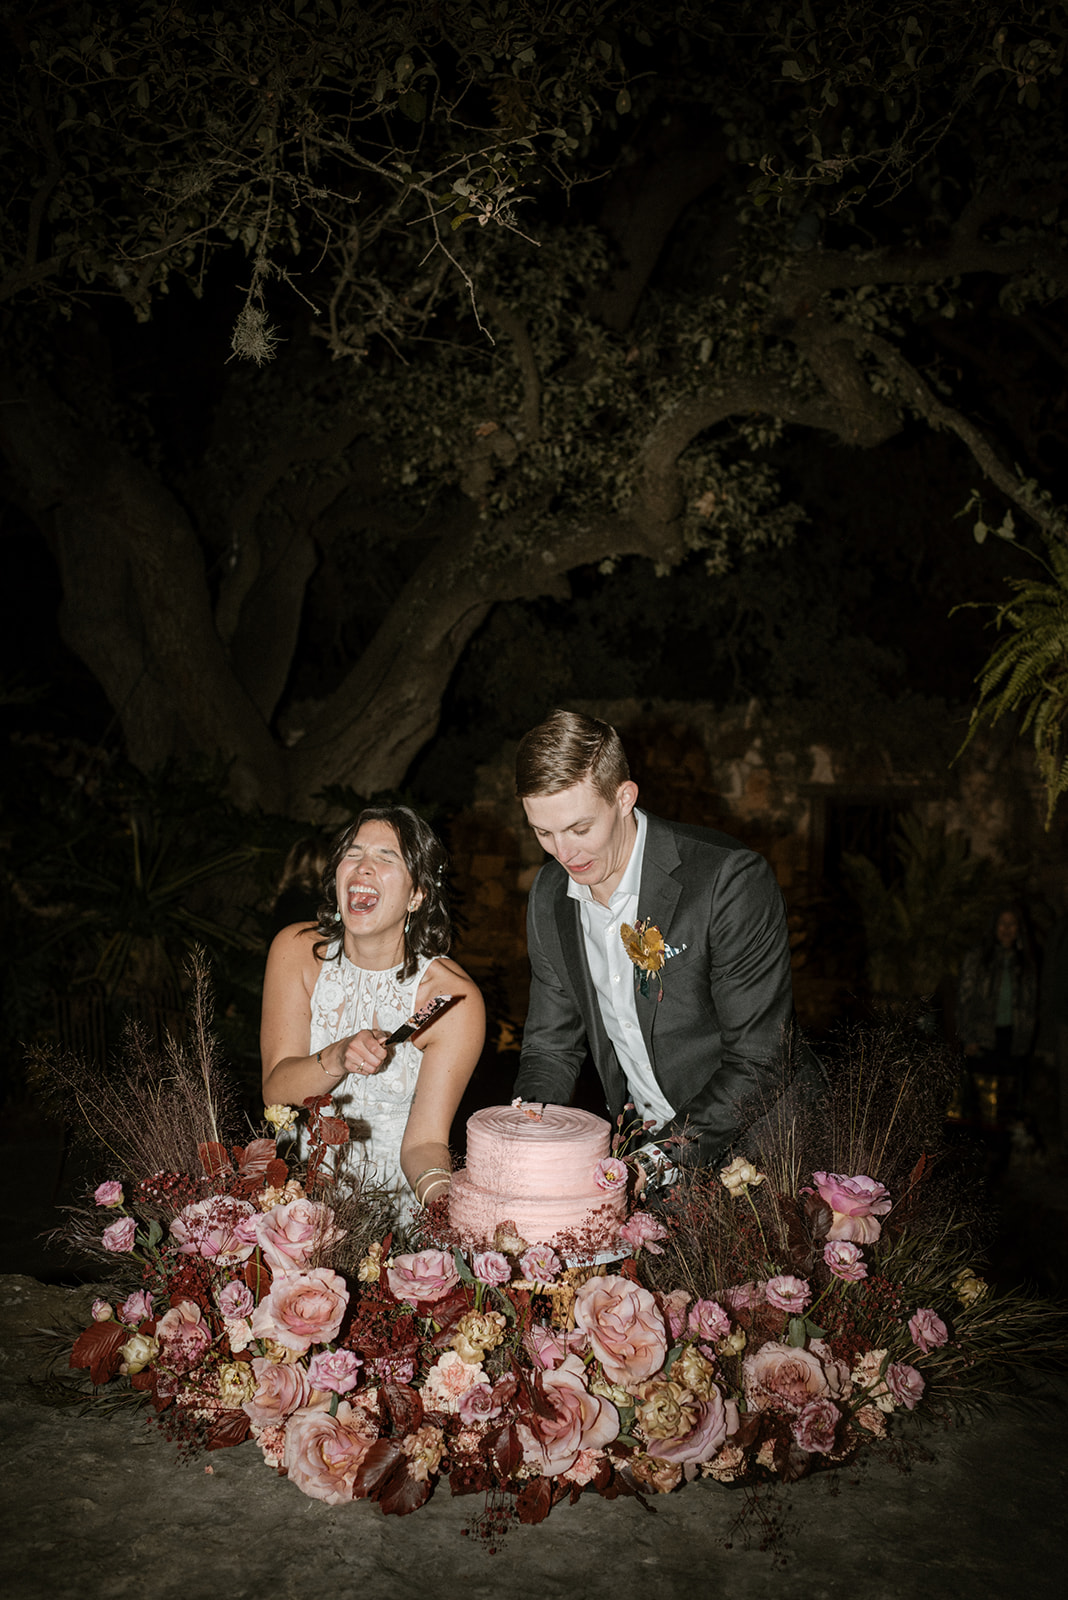 Best Candid wedding photographer Austin Texas